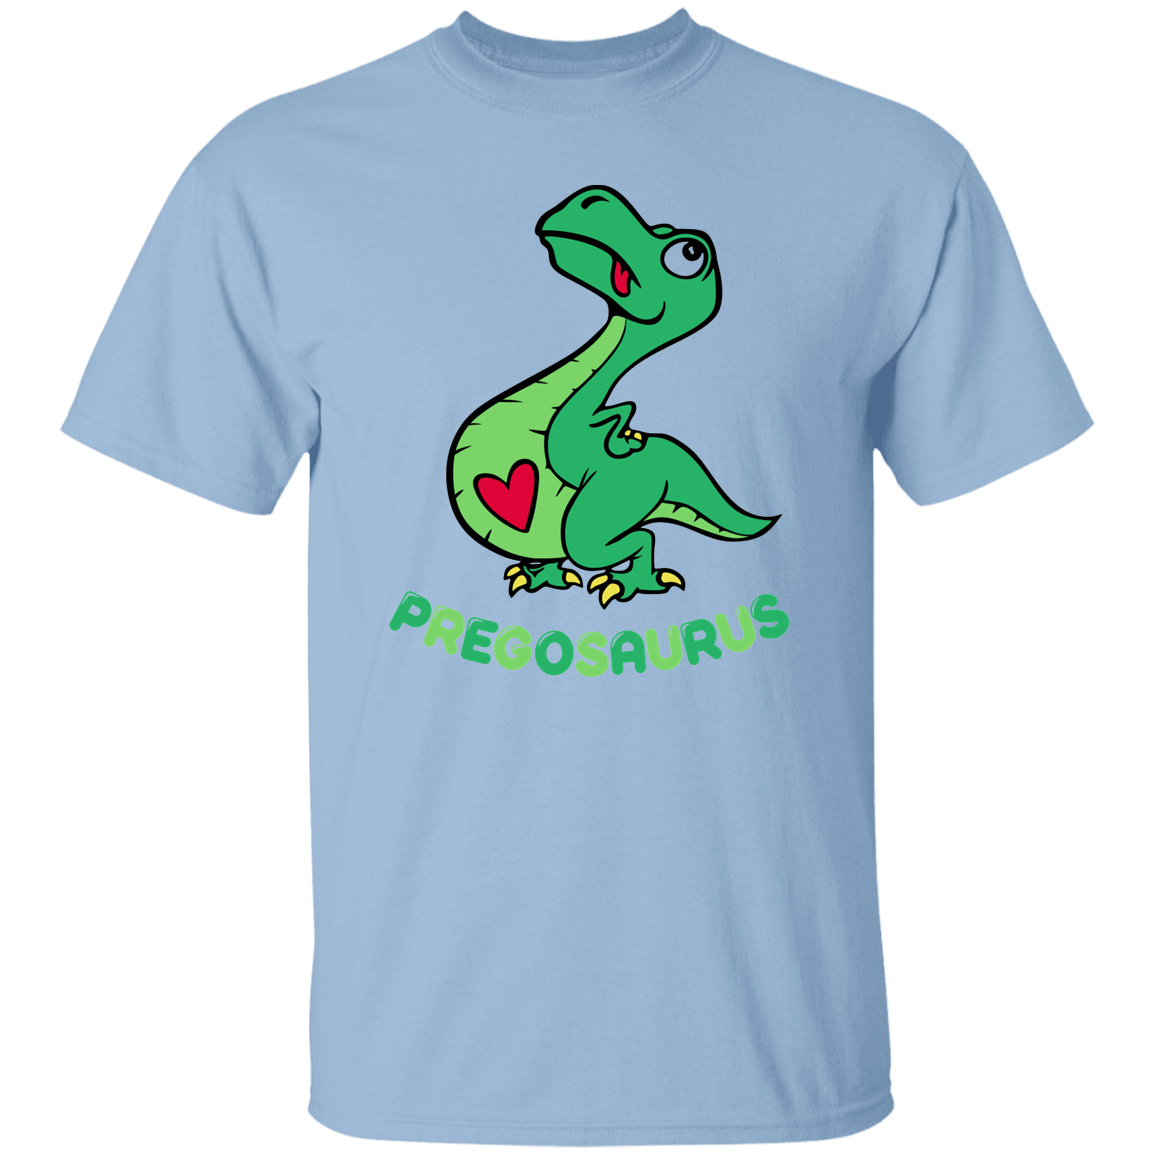 Pregosaurus T-Shirt